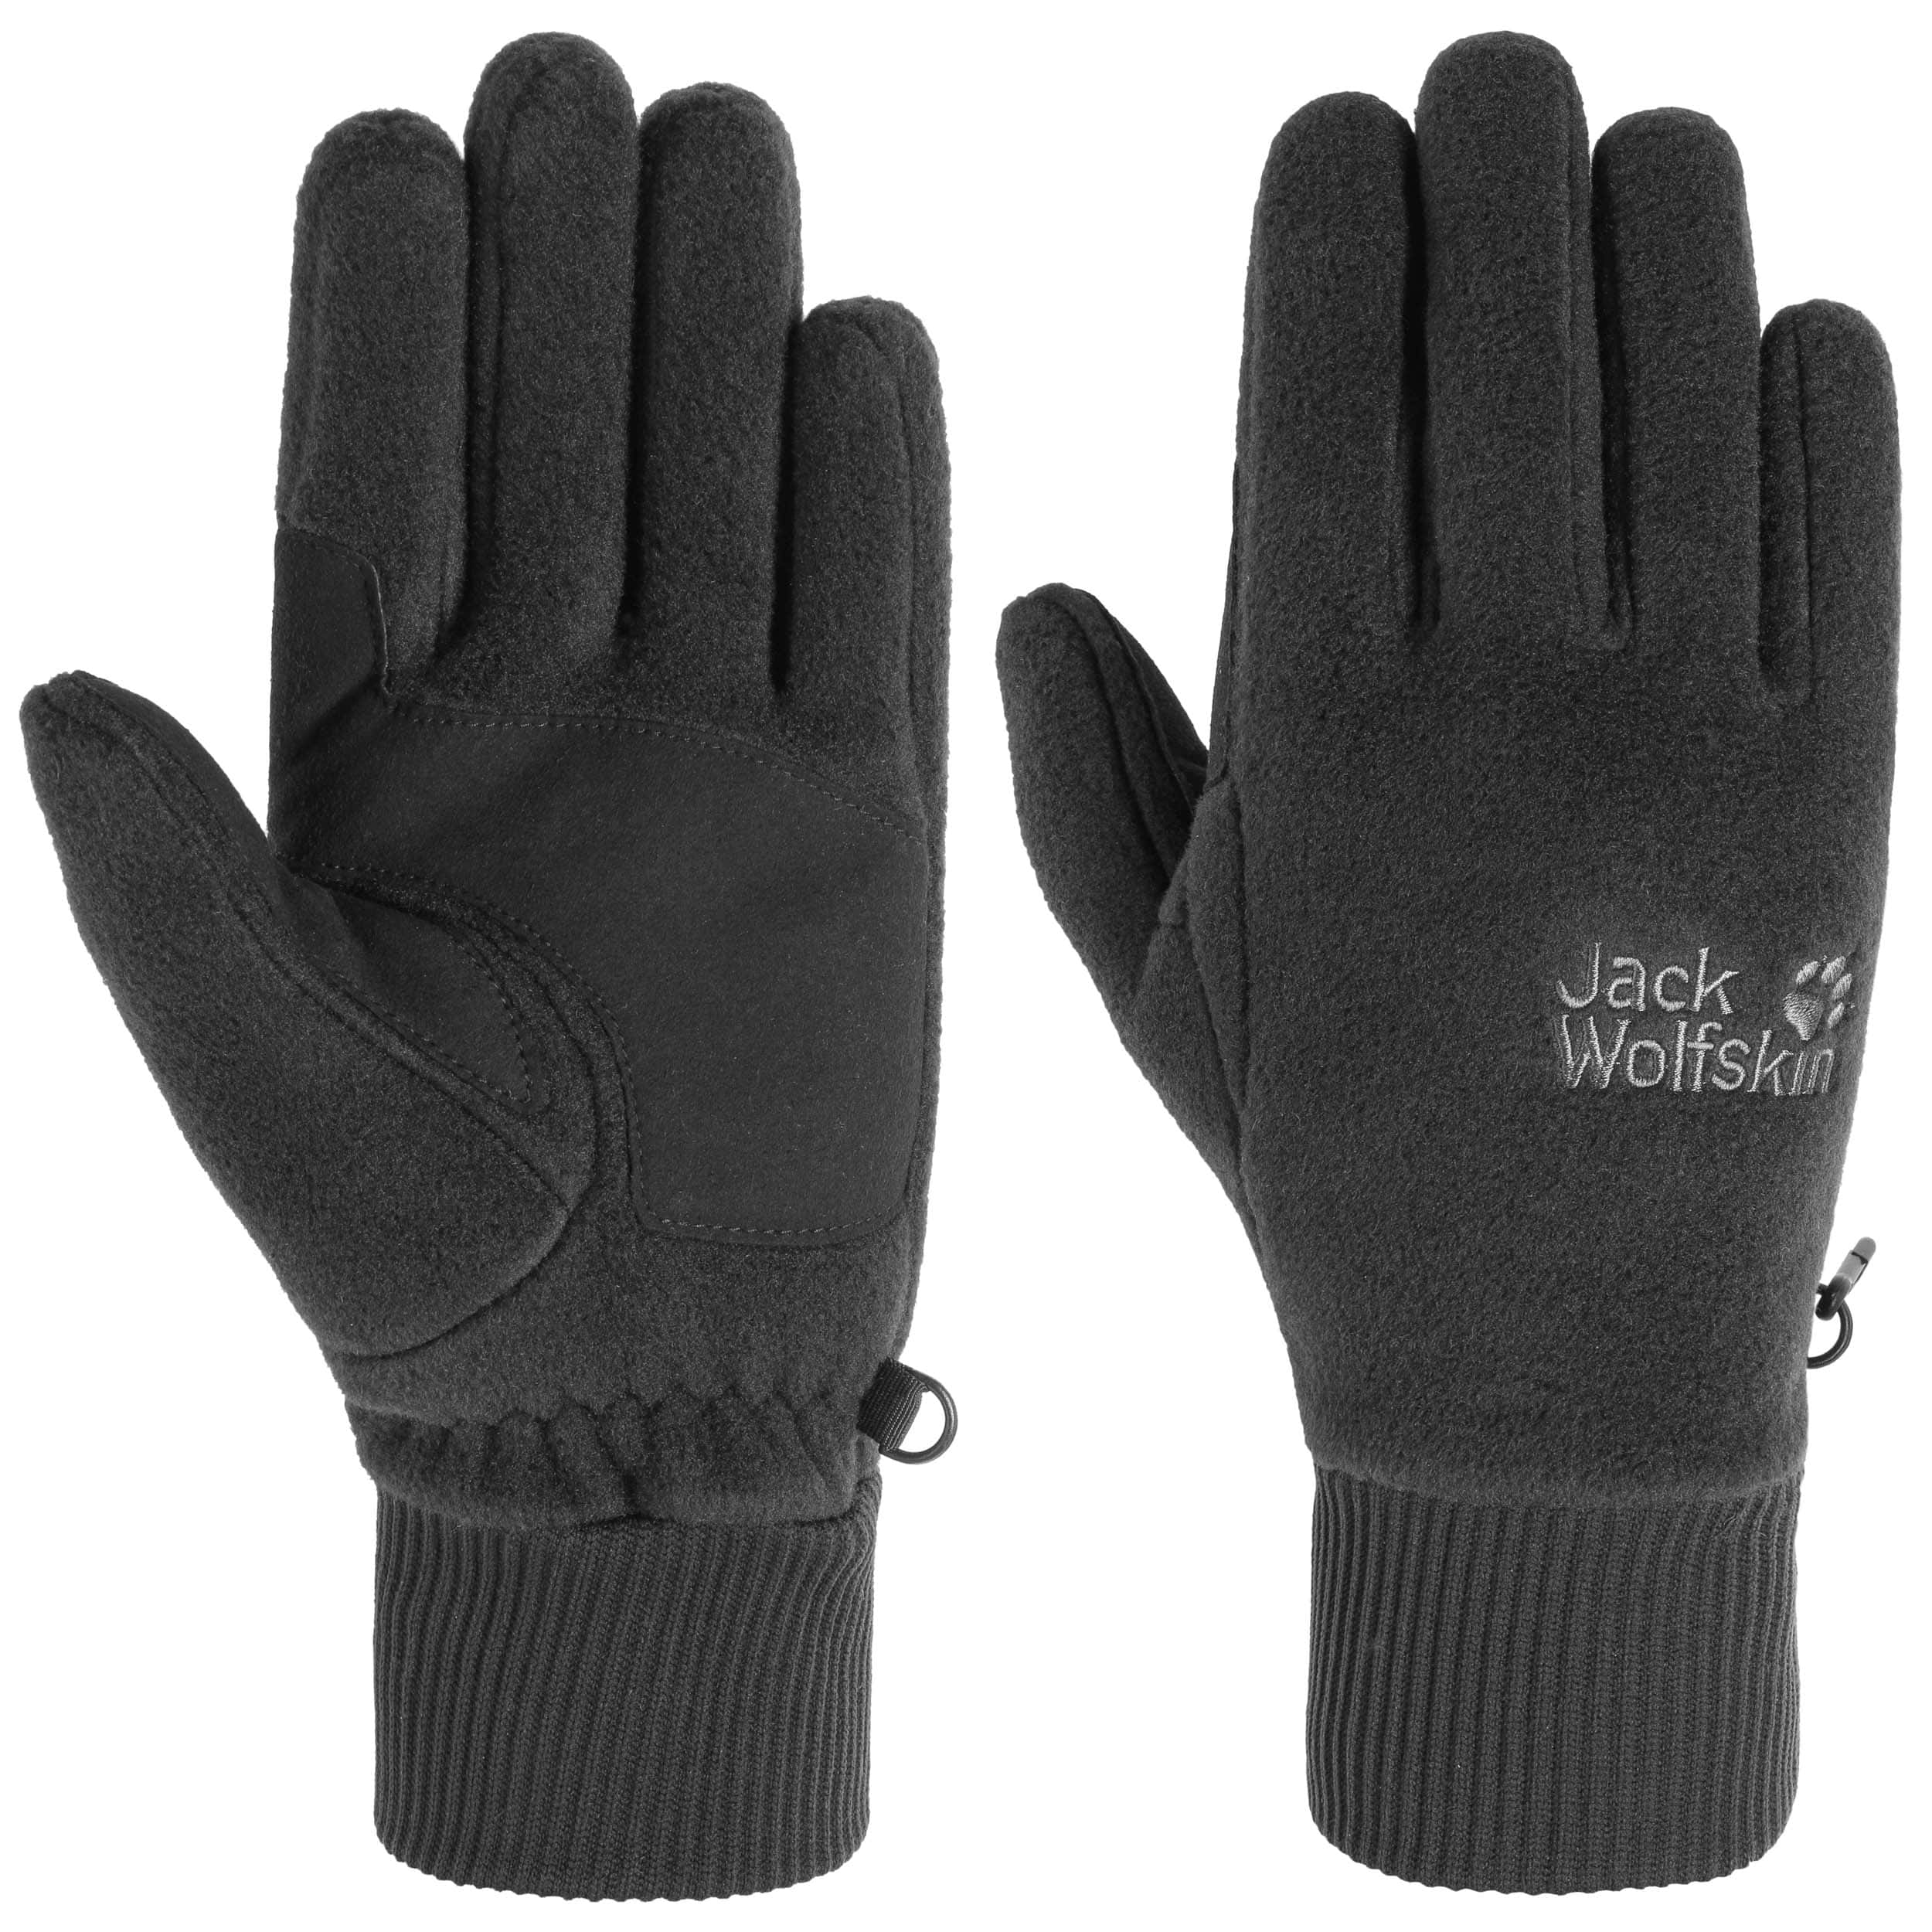 Vertigo Fleece Gloves by Jack 37,95 - Wolfskin €